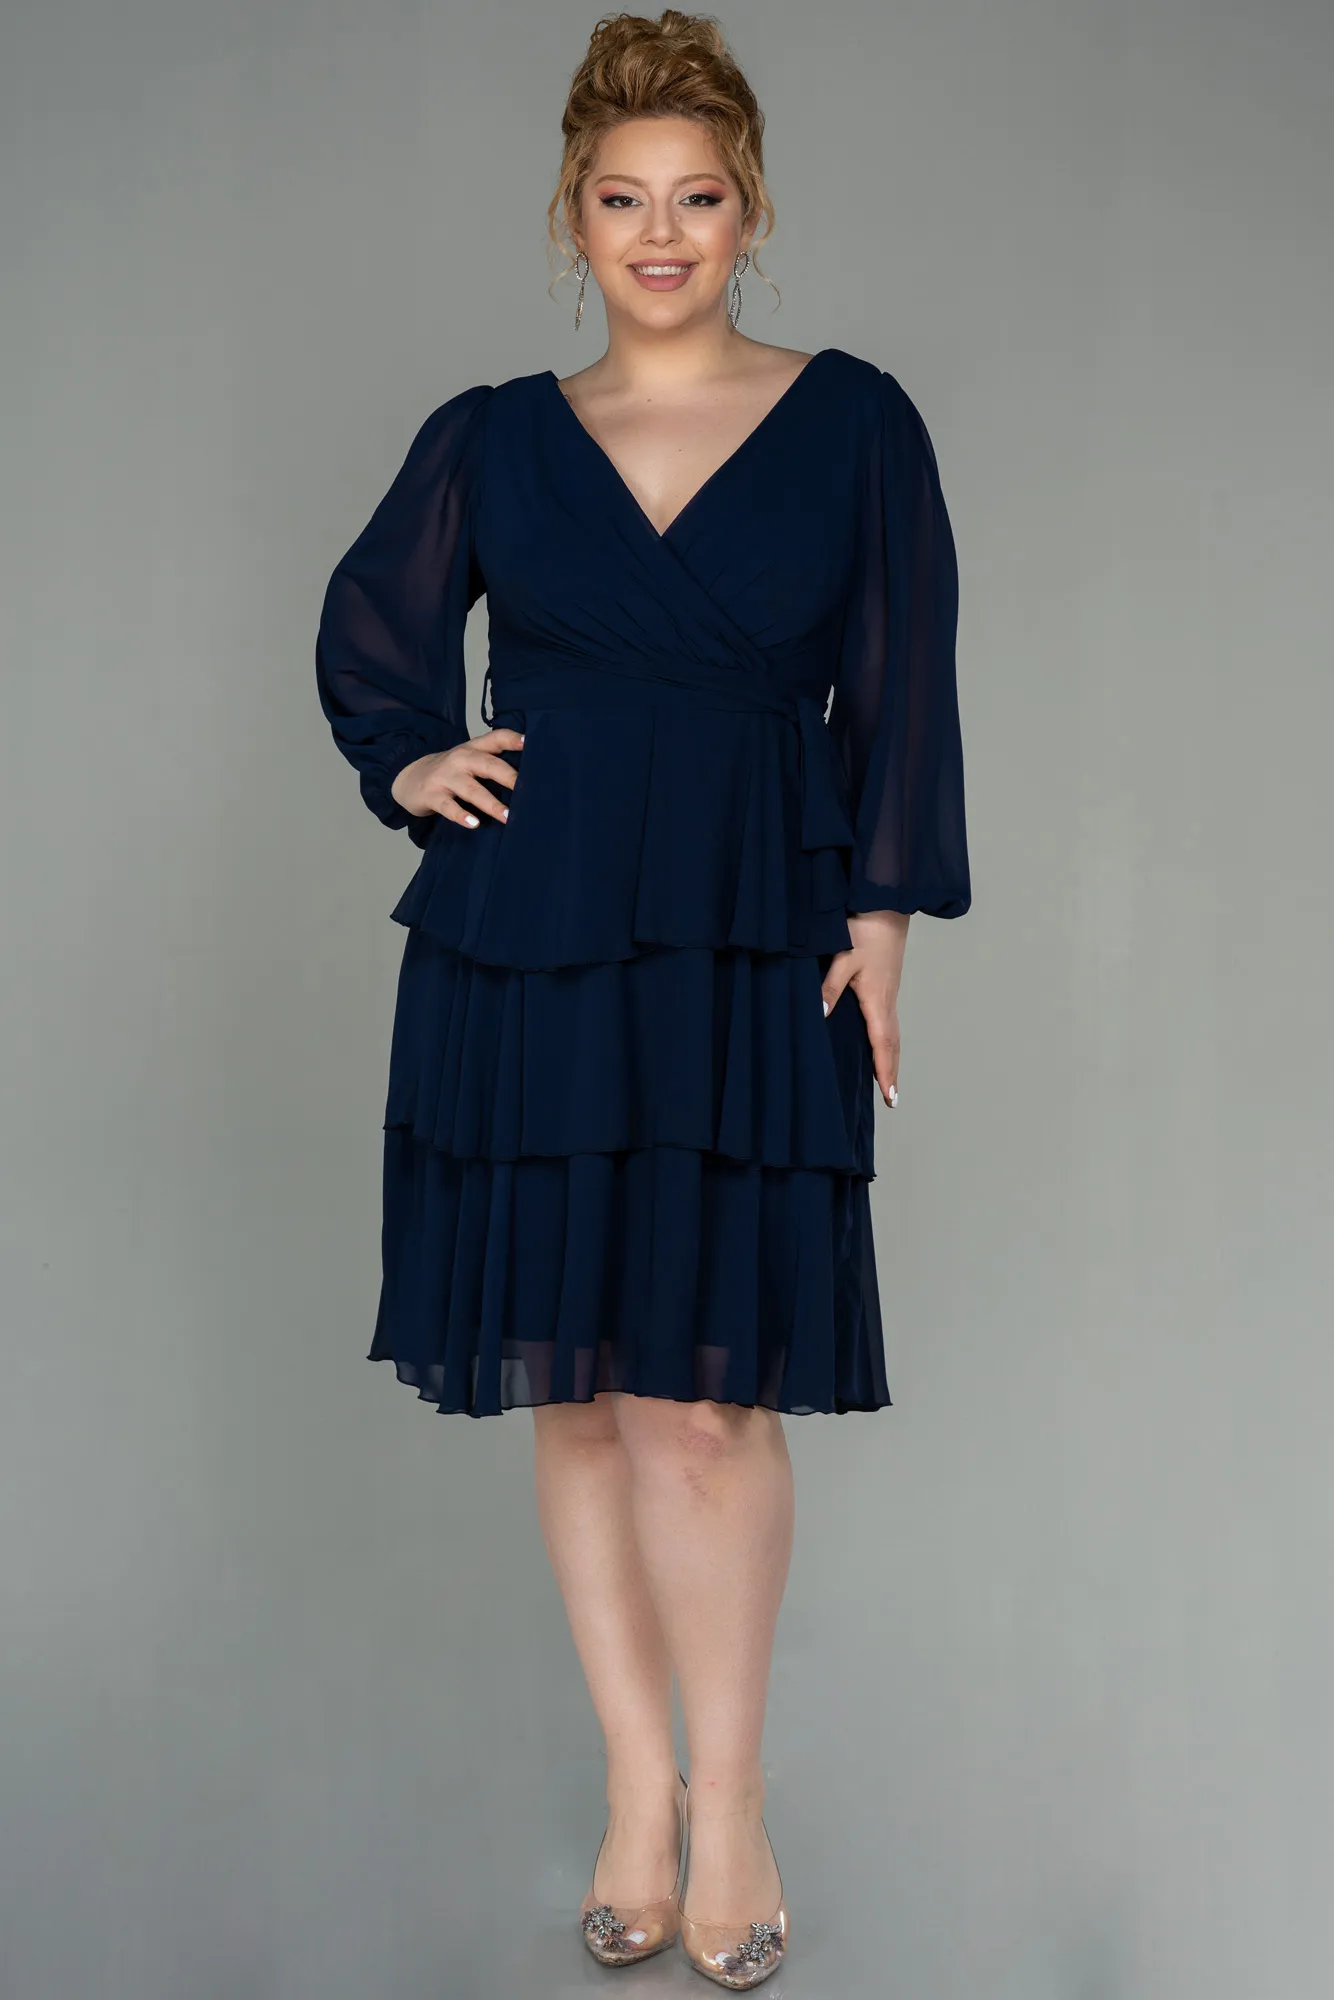 Navy Blue-Short Chiffon Oversized Evening Dress ABK1002